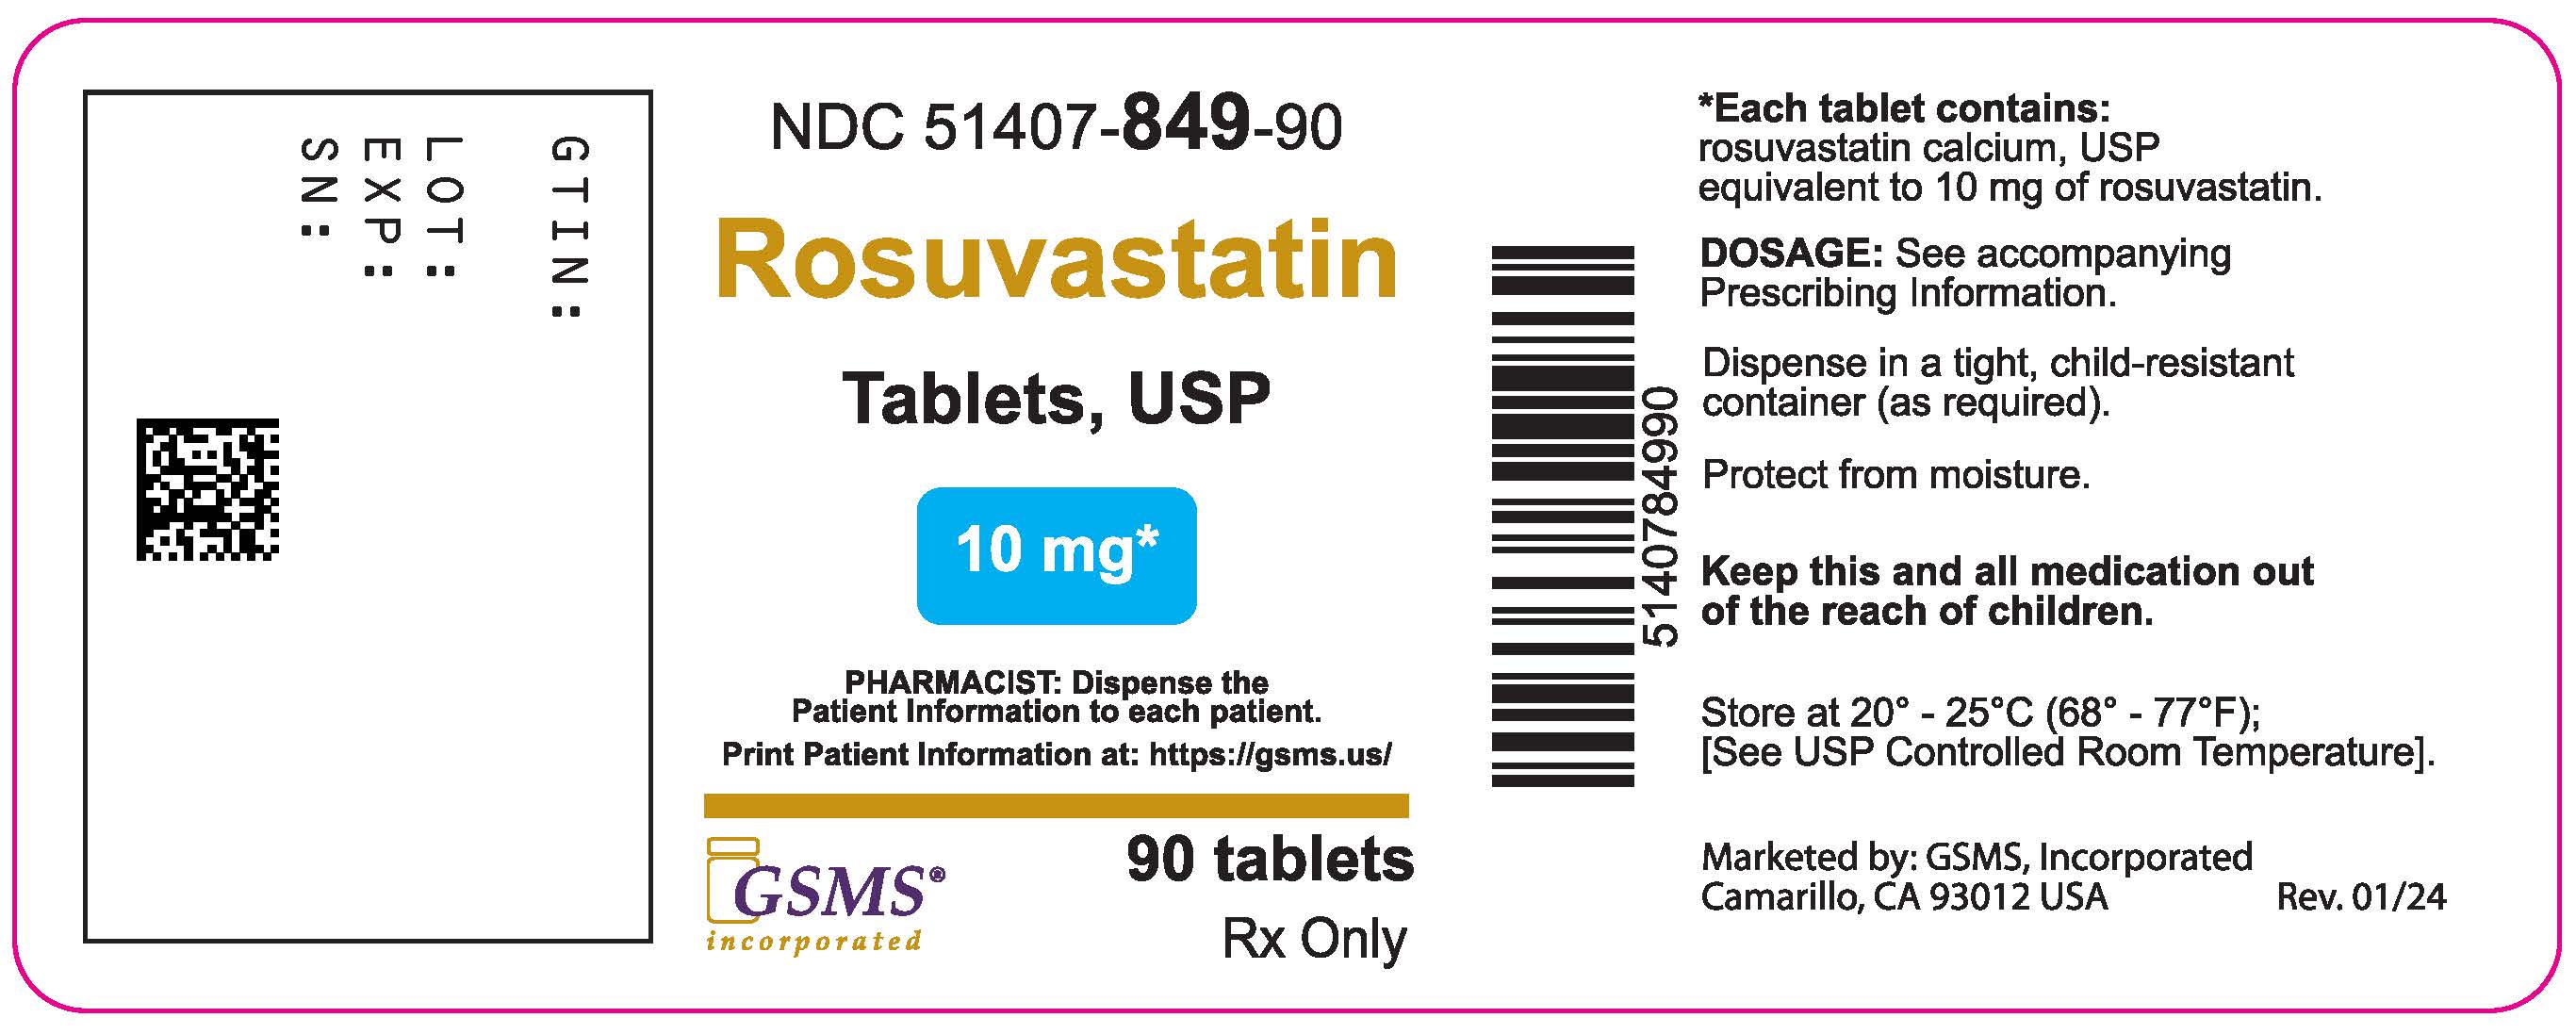 51407-849-90LB - Rosuvastatin - Rev. 0124.jpg